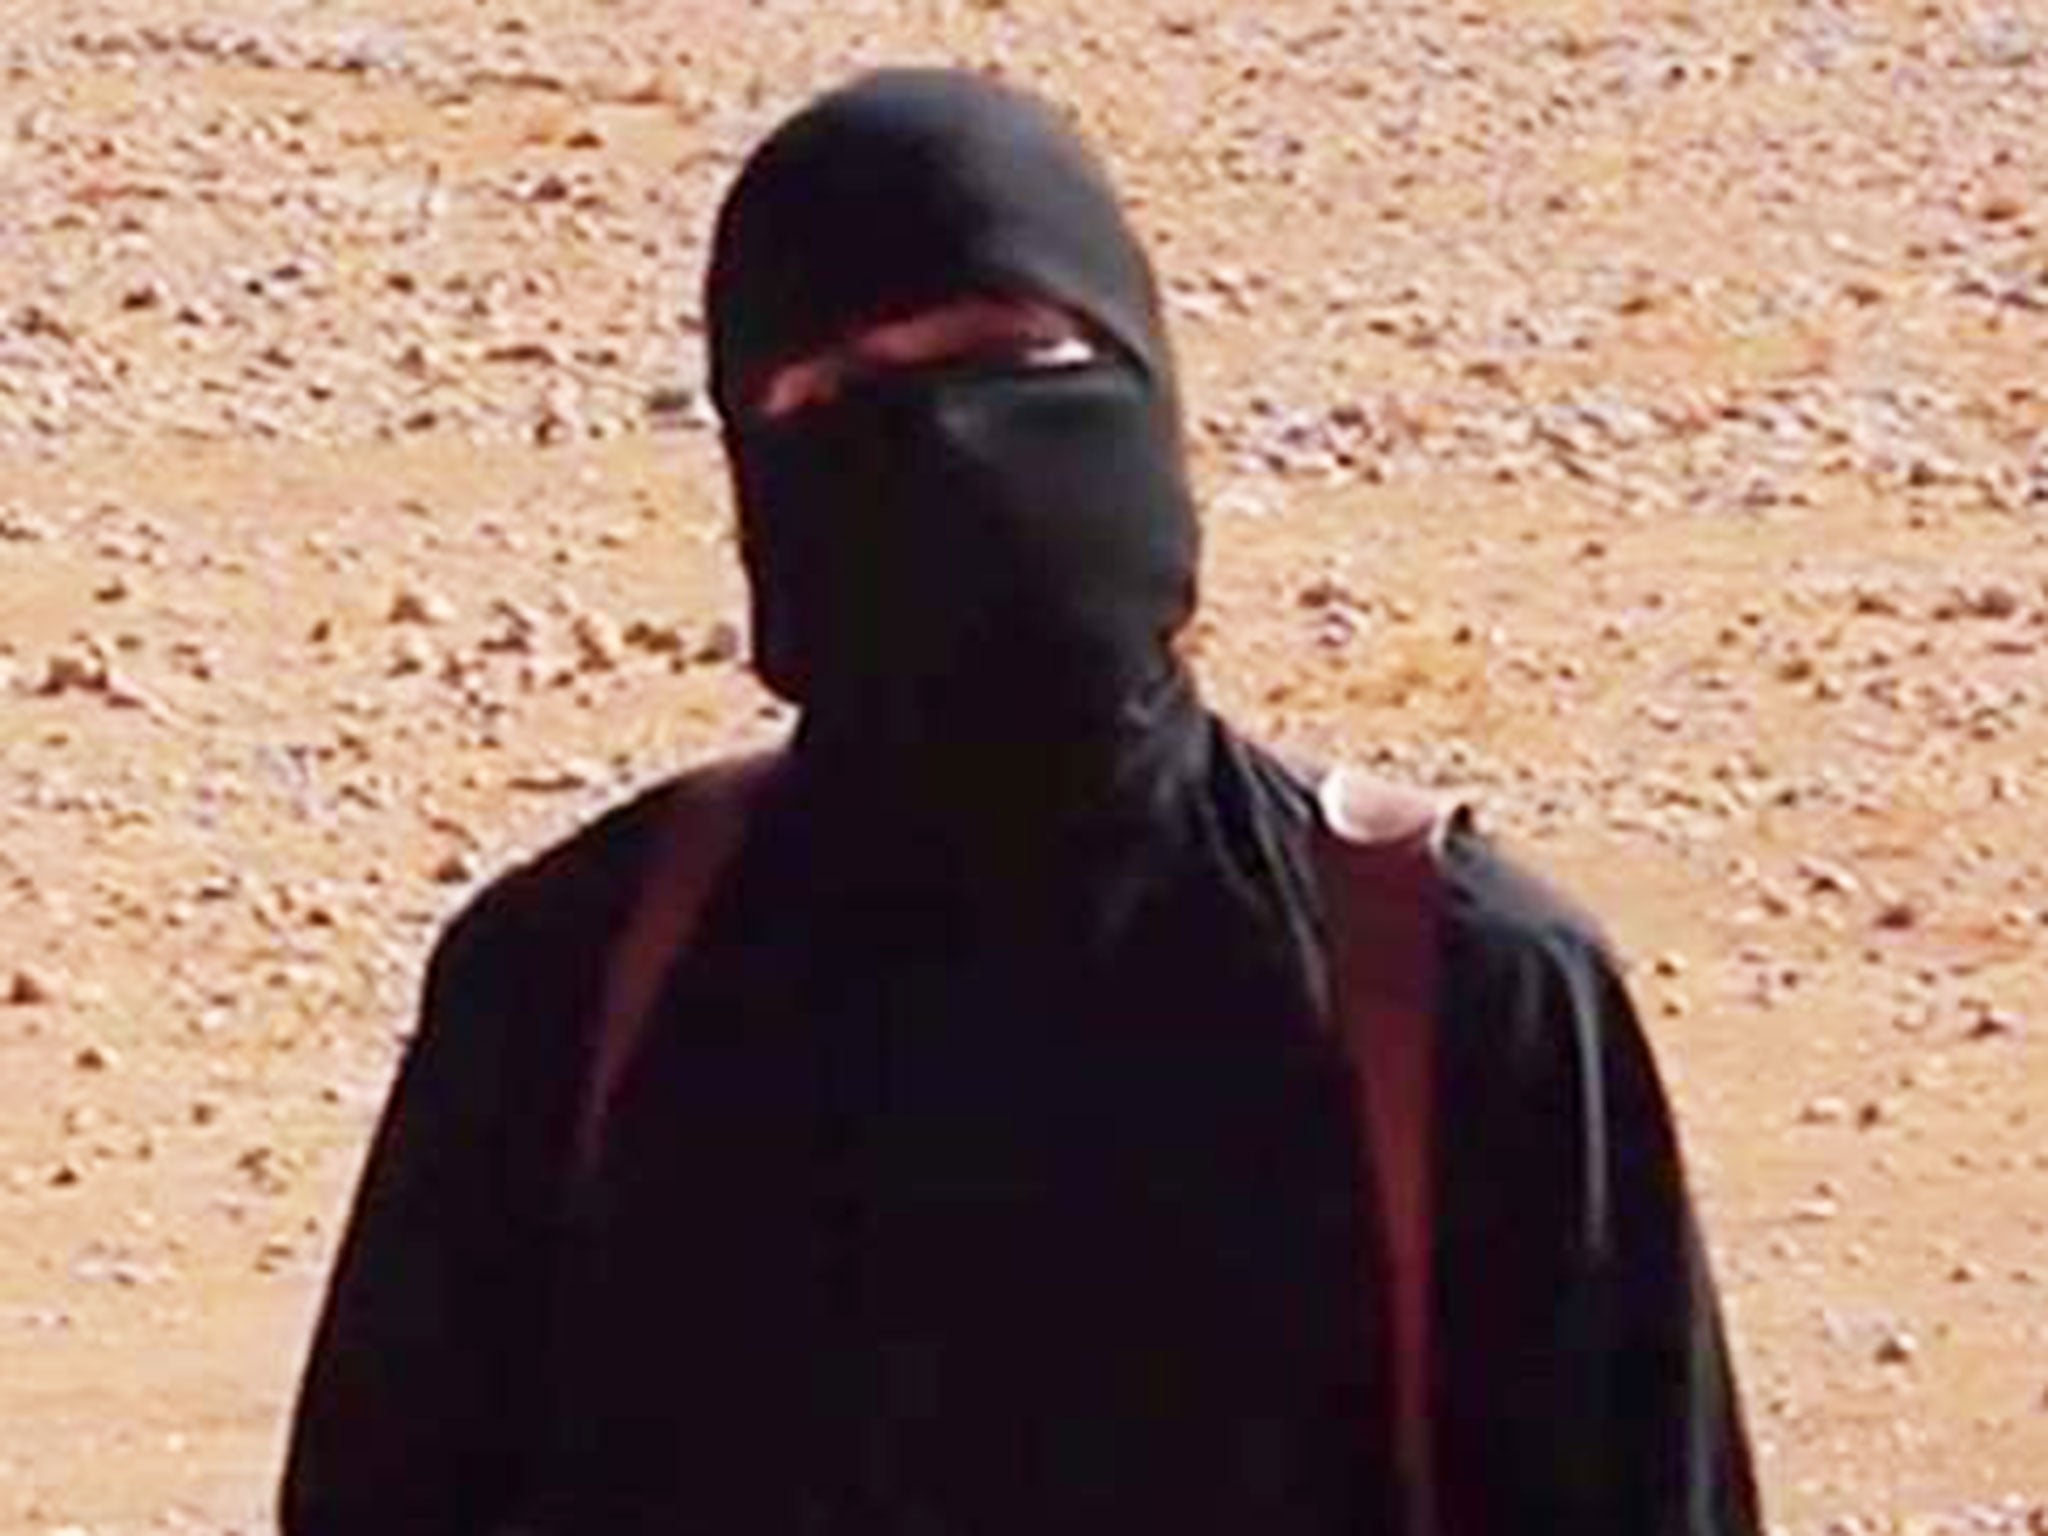 The ringleader of the group, Mohammed Emwazi, became known as 'Jihadi John'